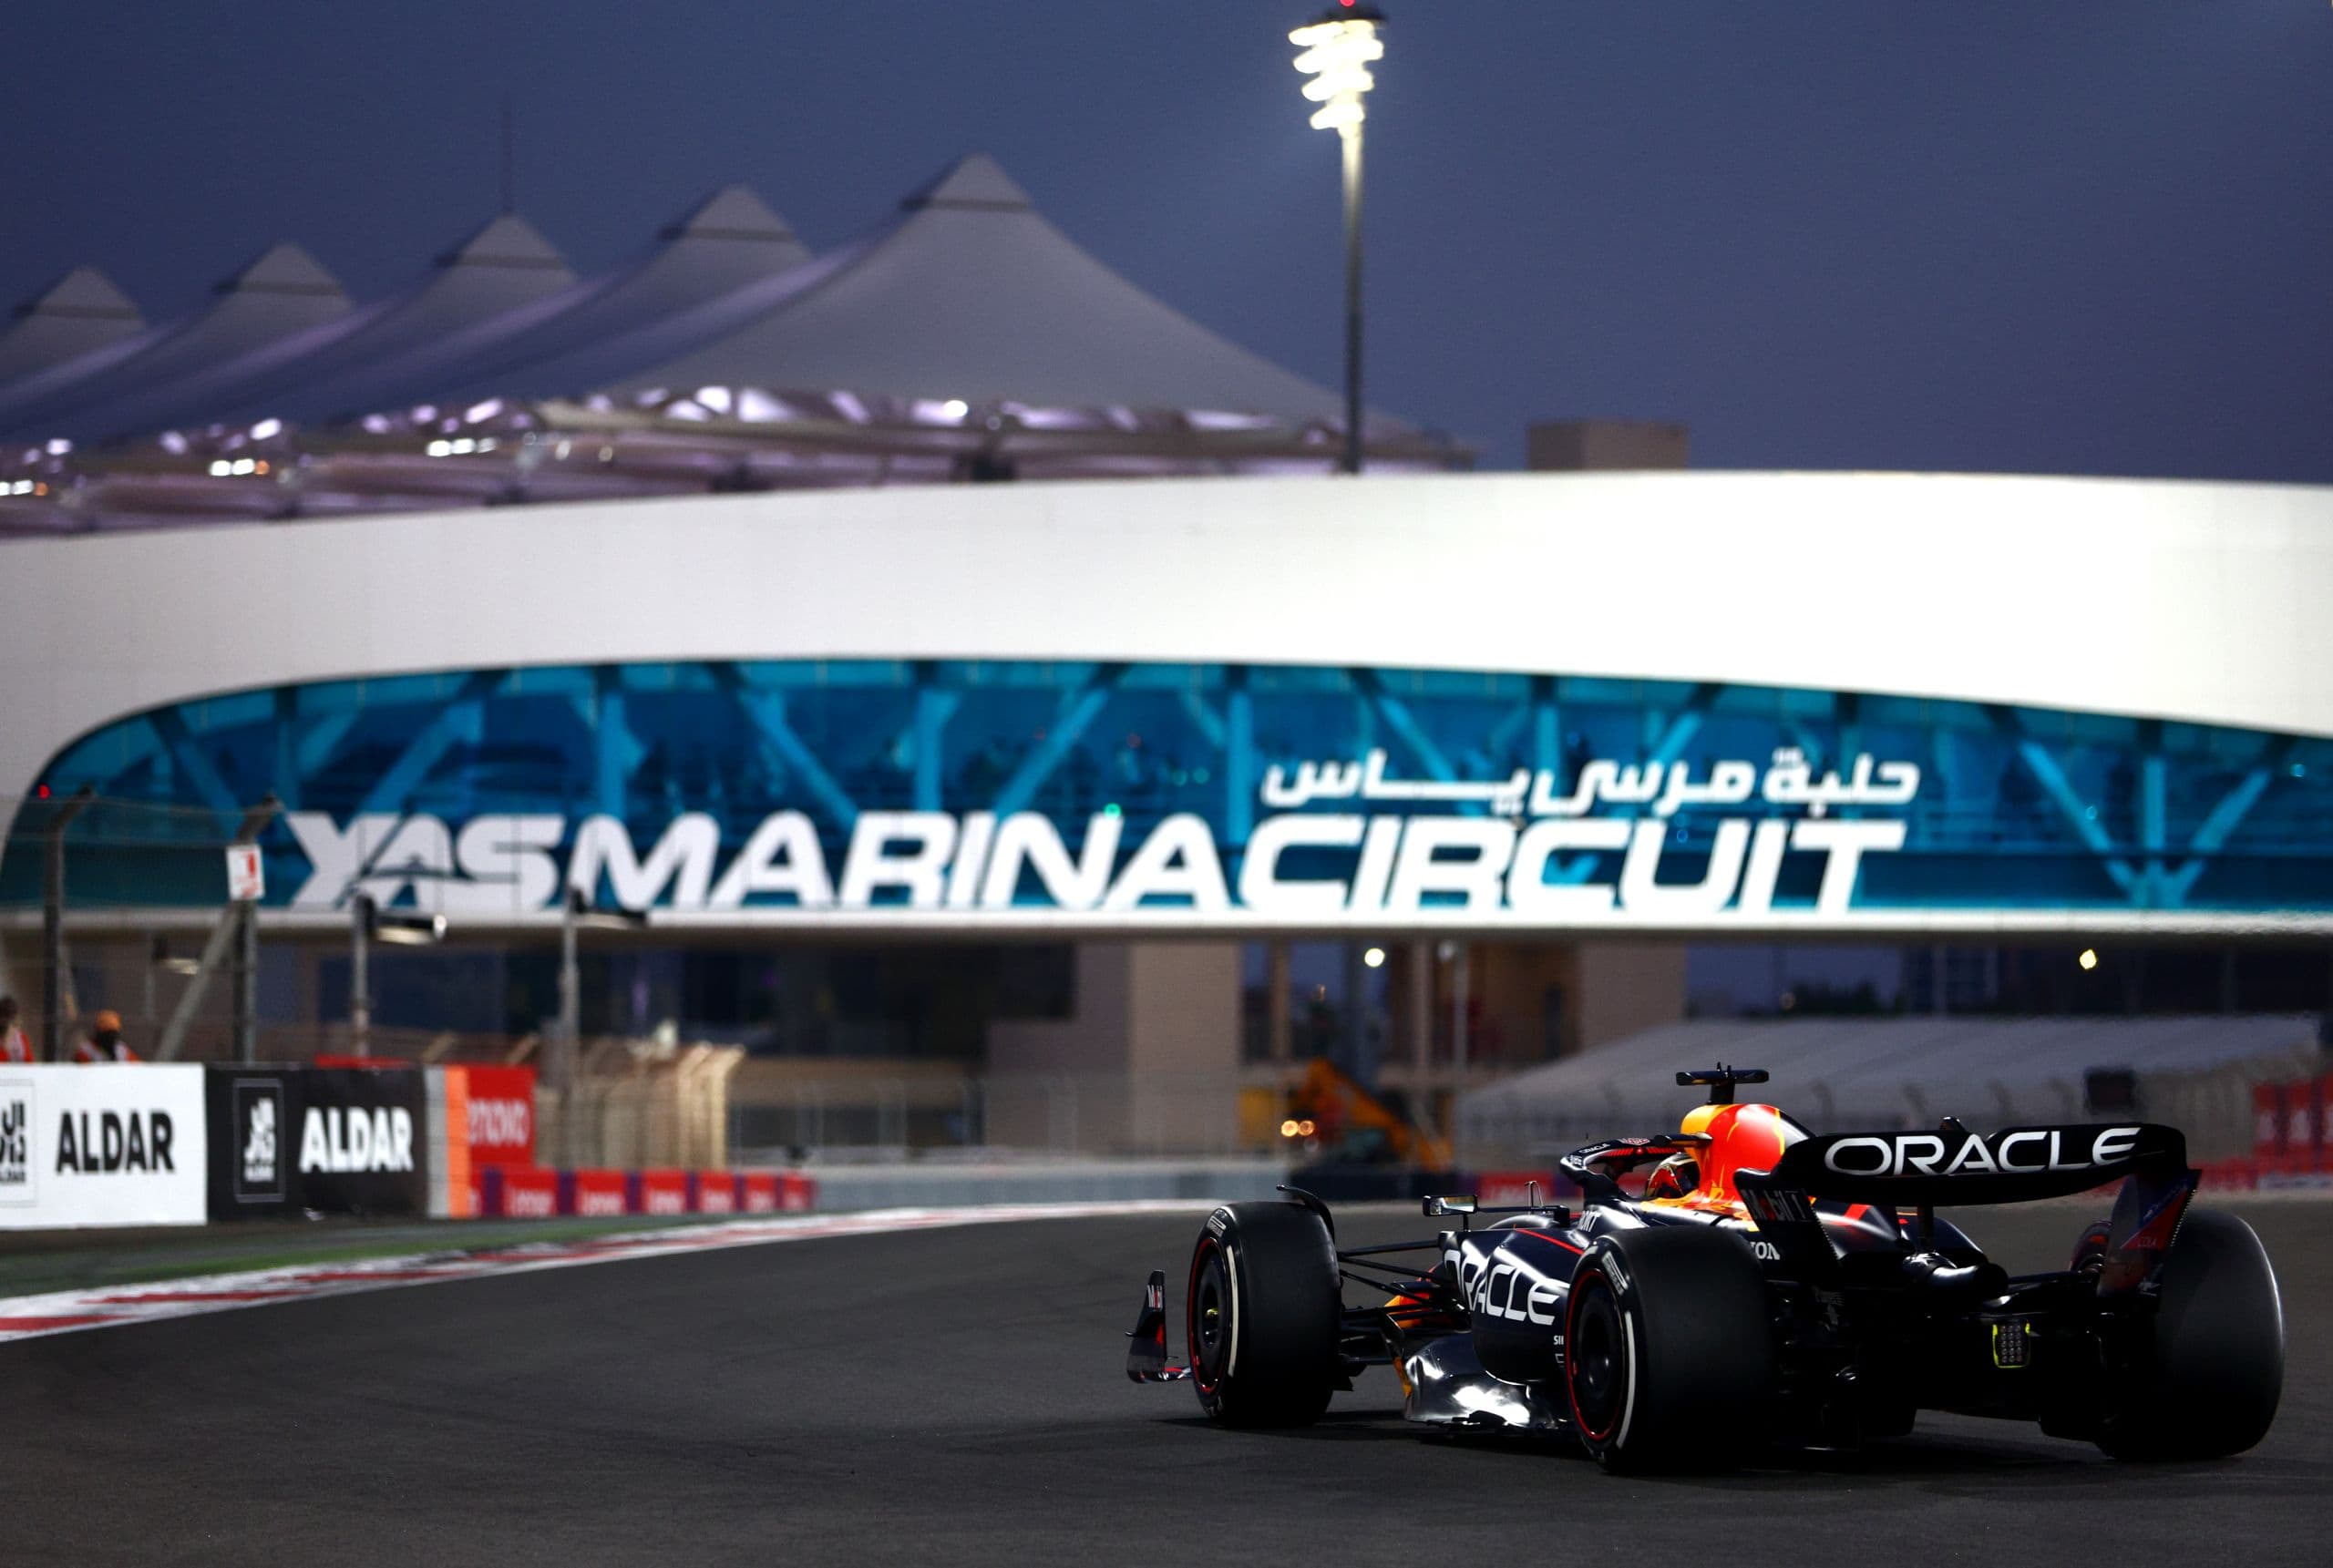 F1 Grand Prix Of Abu Dhabi